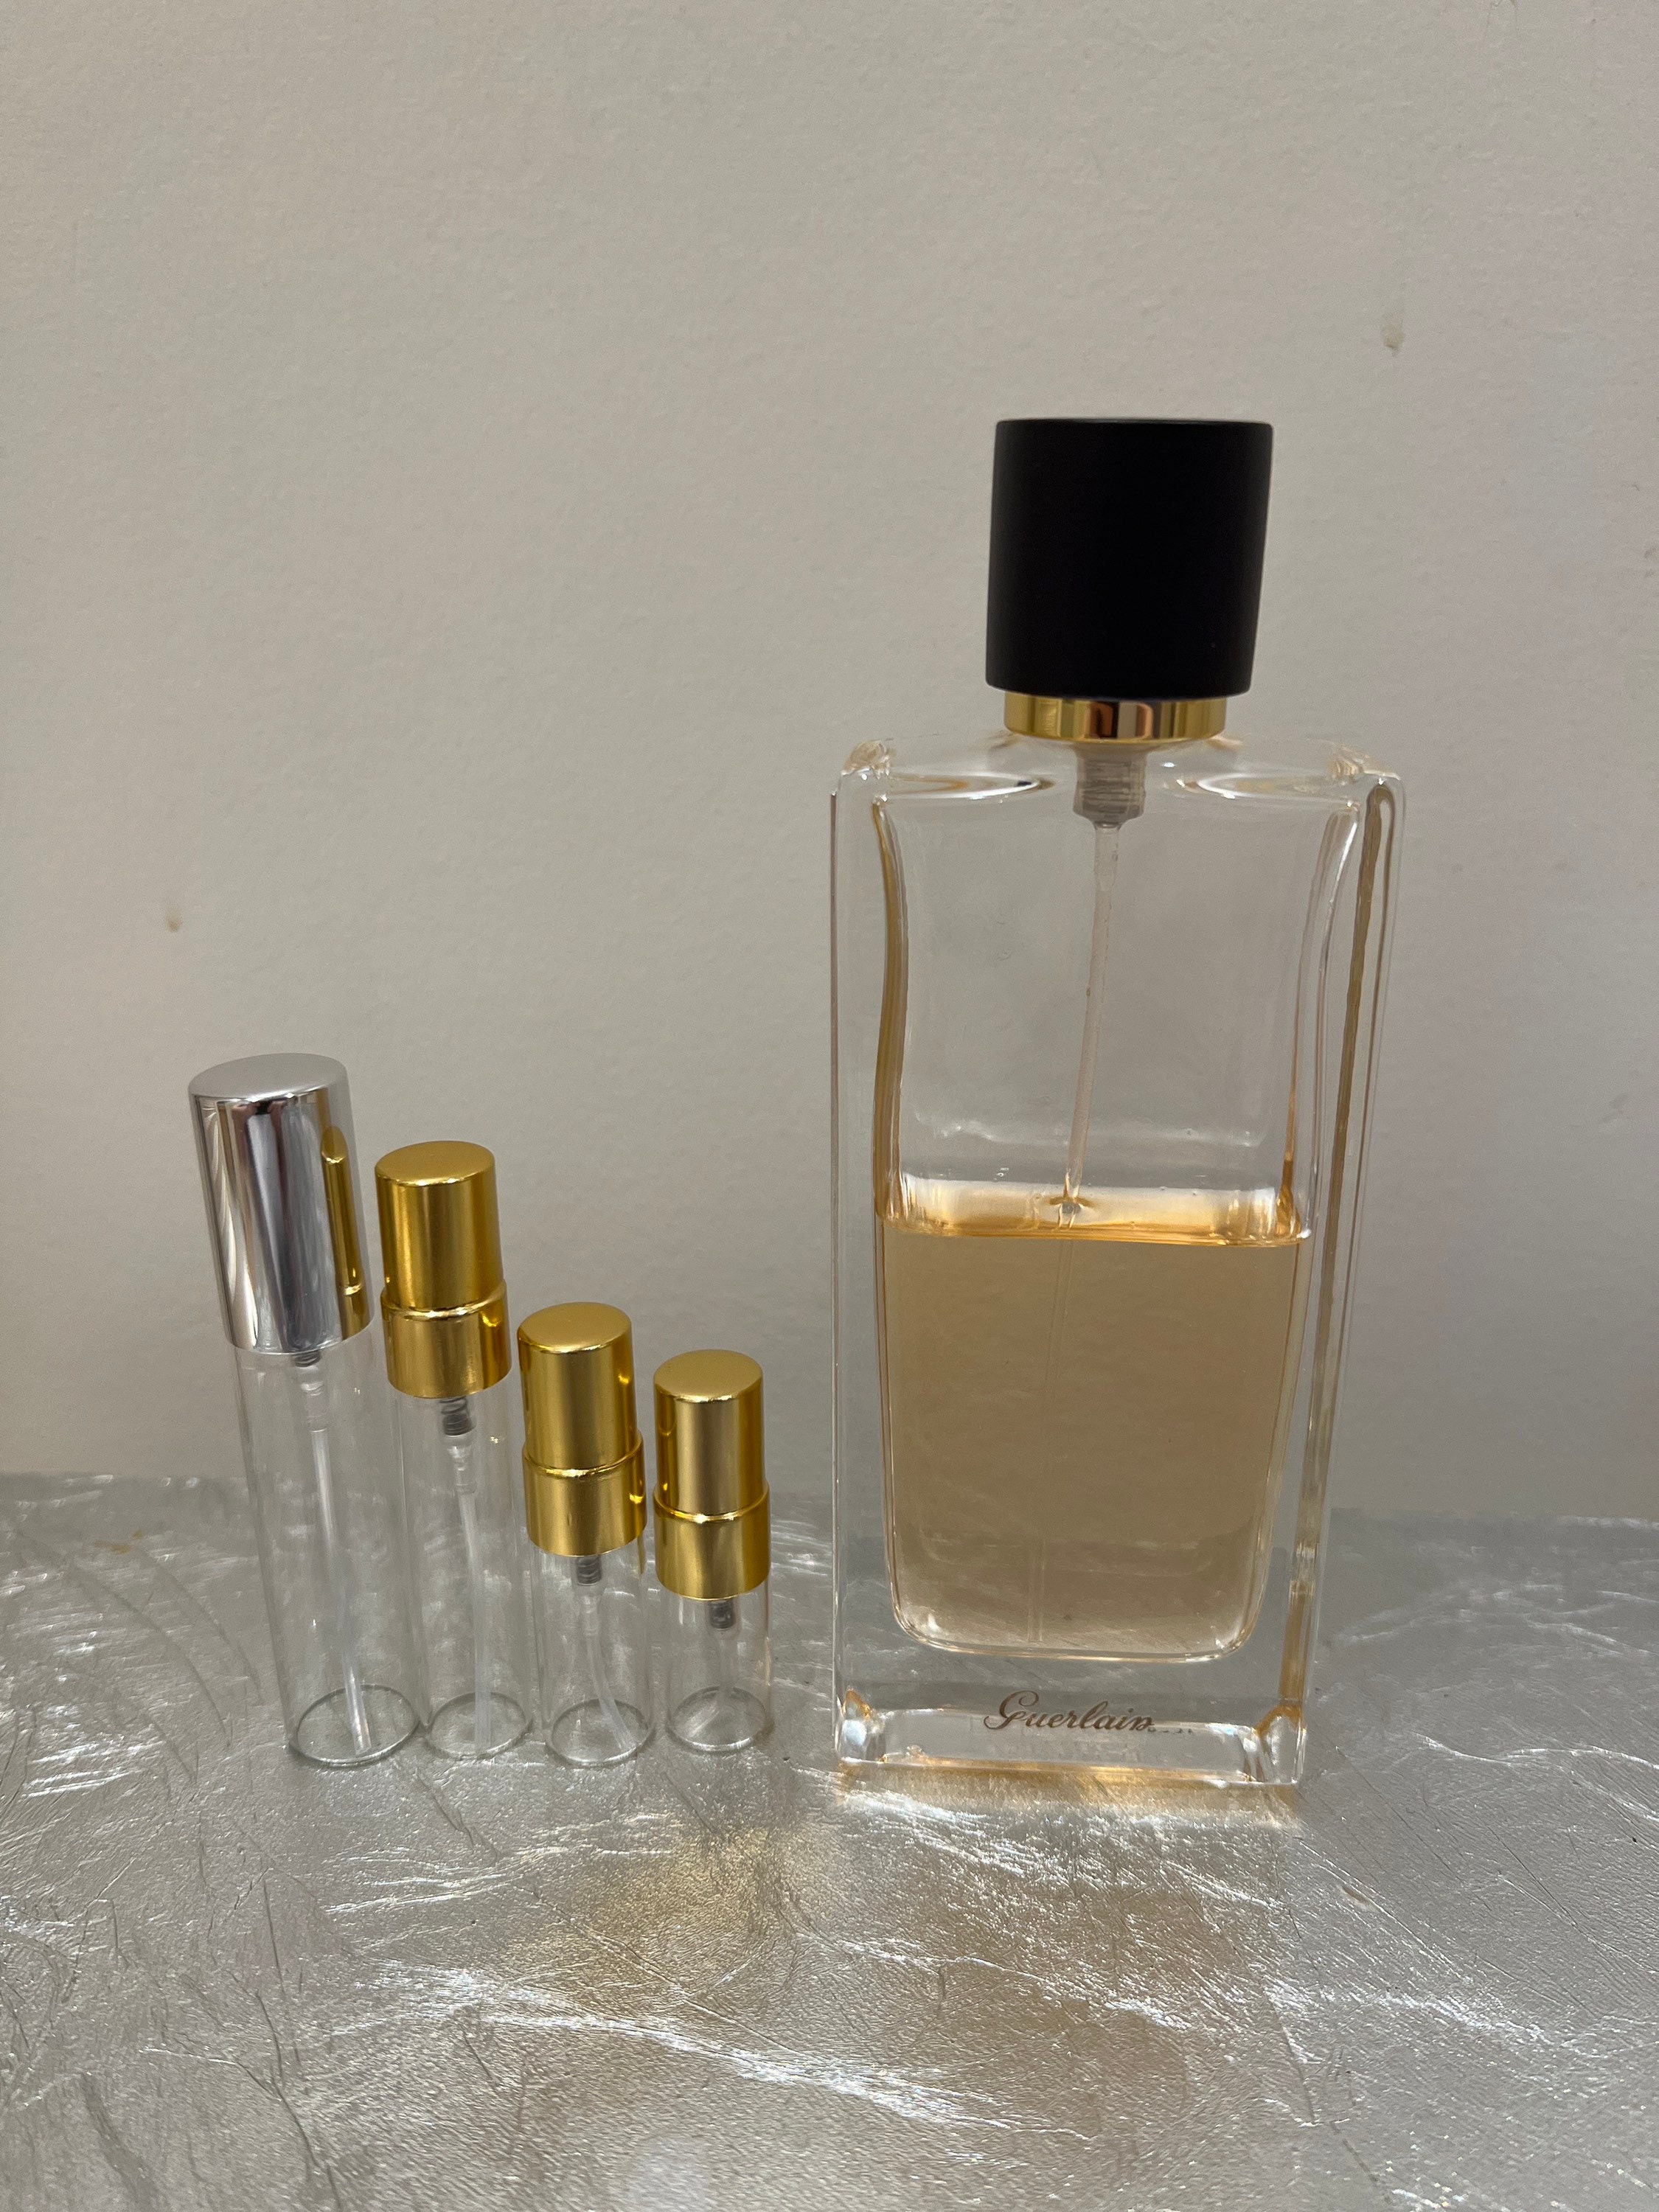 Guerlain Musc Outreblanc EDP Perfume Sample 2ml/5ml/8ml Travel -  Israel